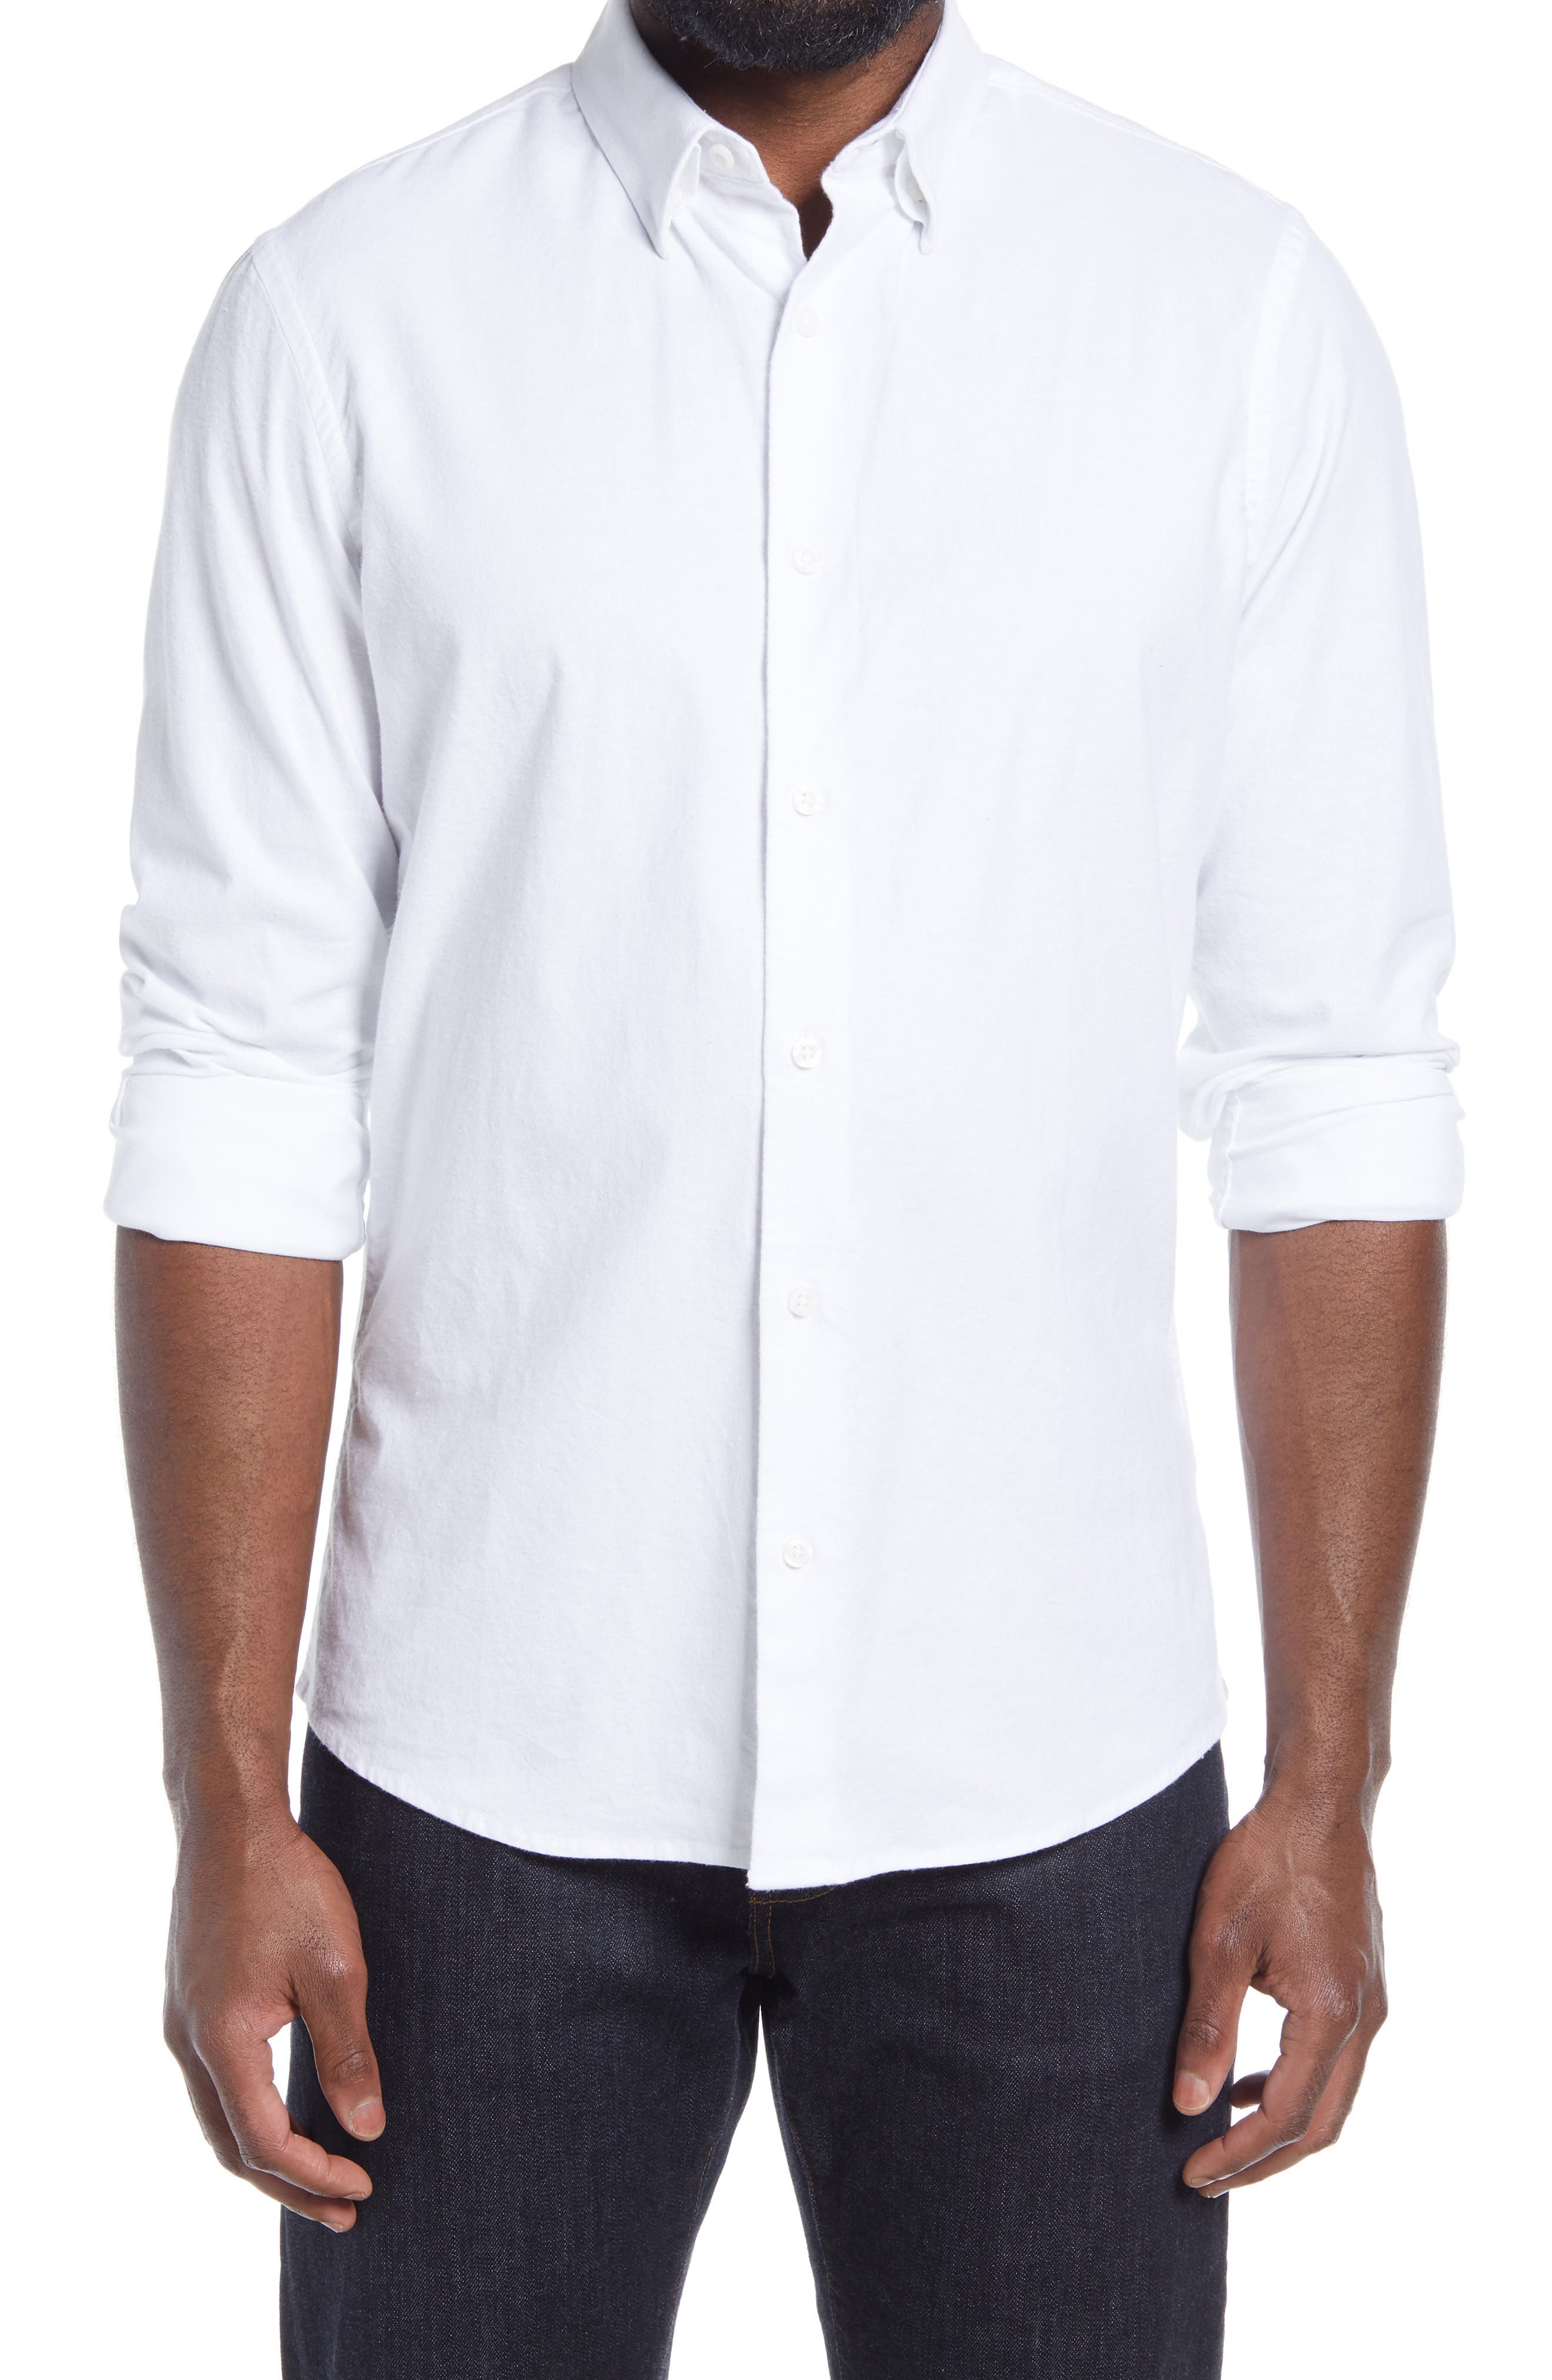 mens white button down shirt long sleeve